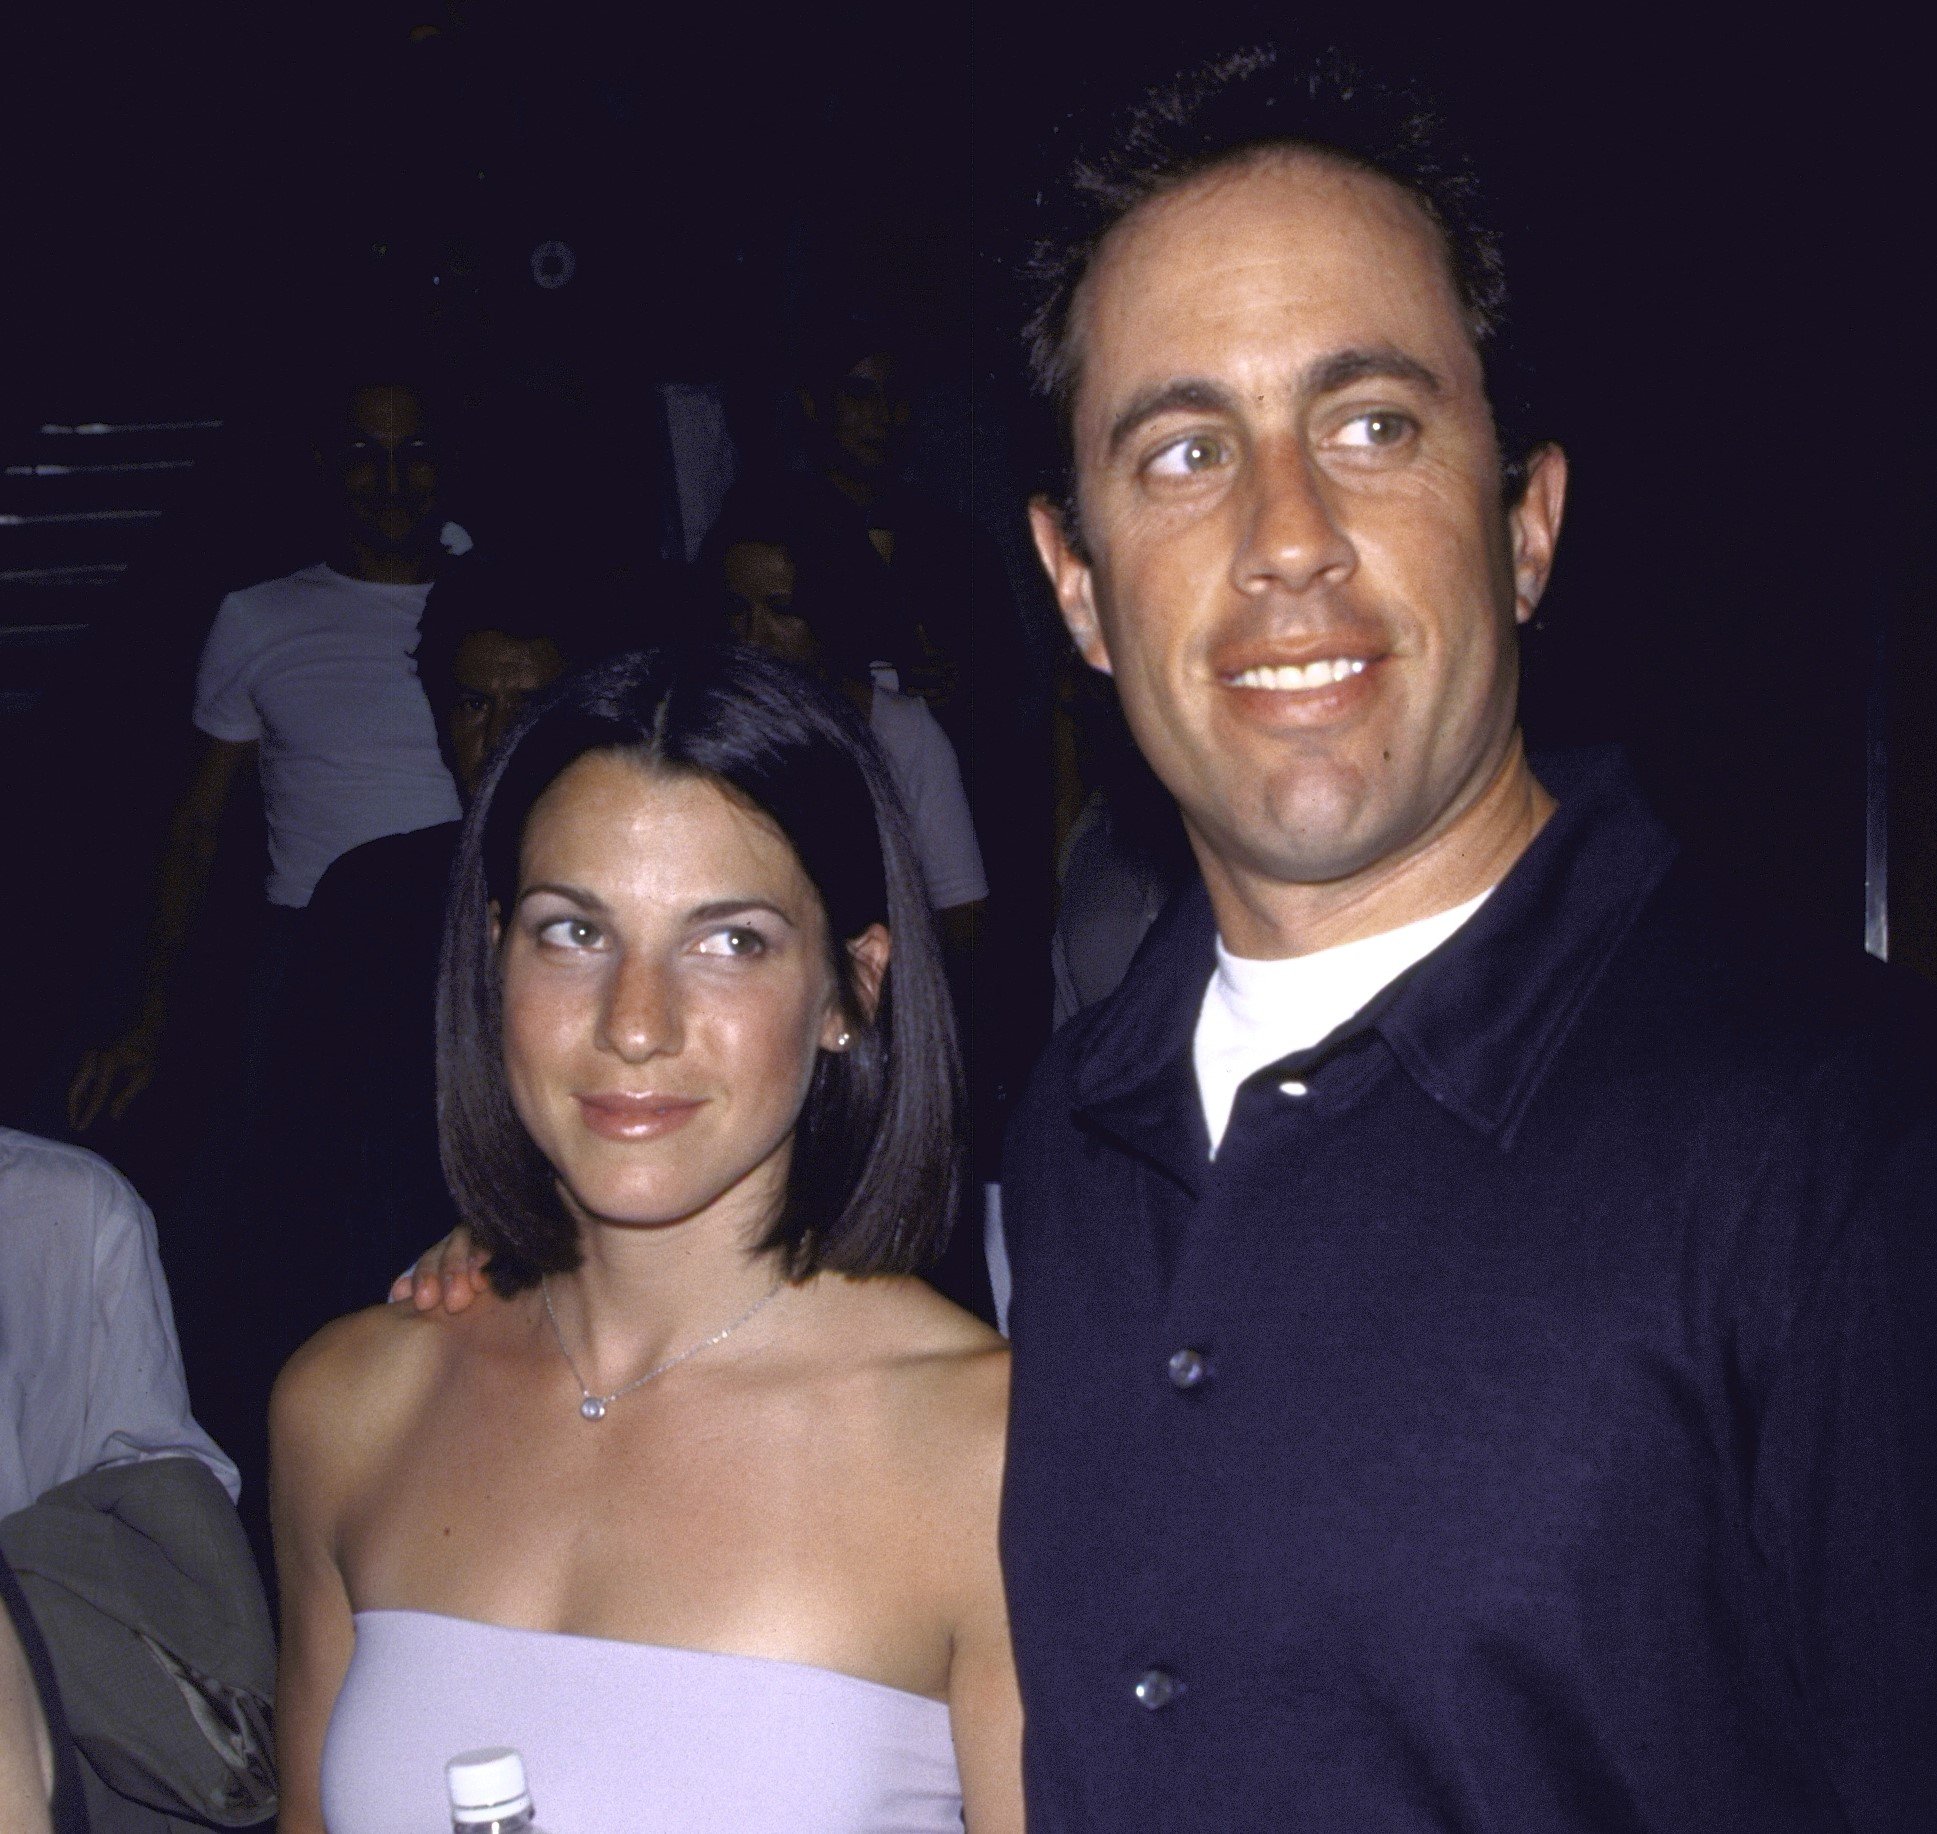 Jerry Seinfeld and Jessica Sklar